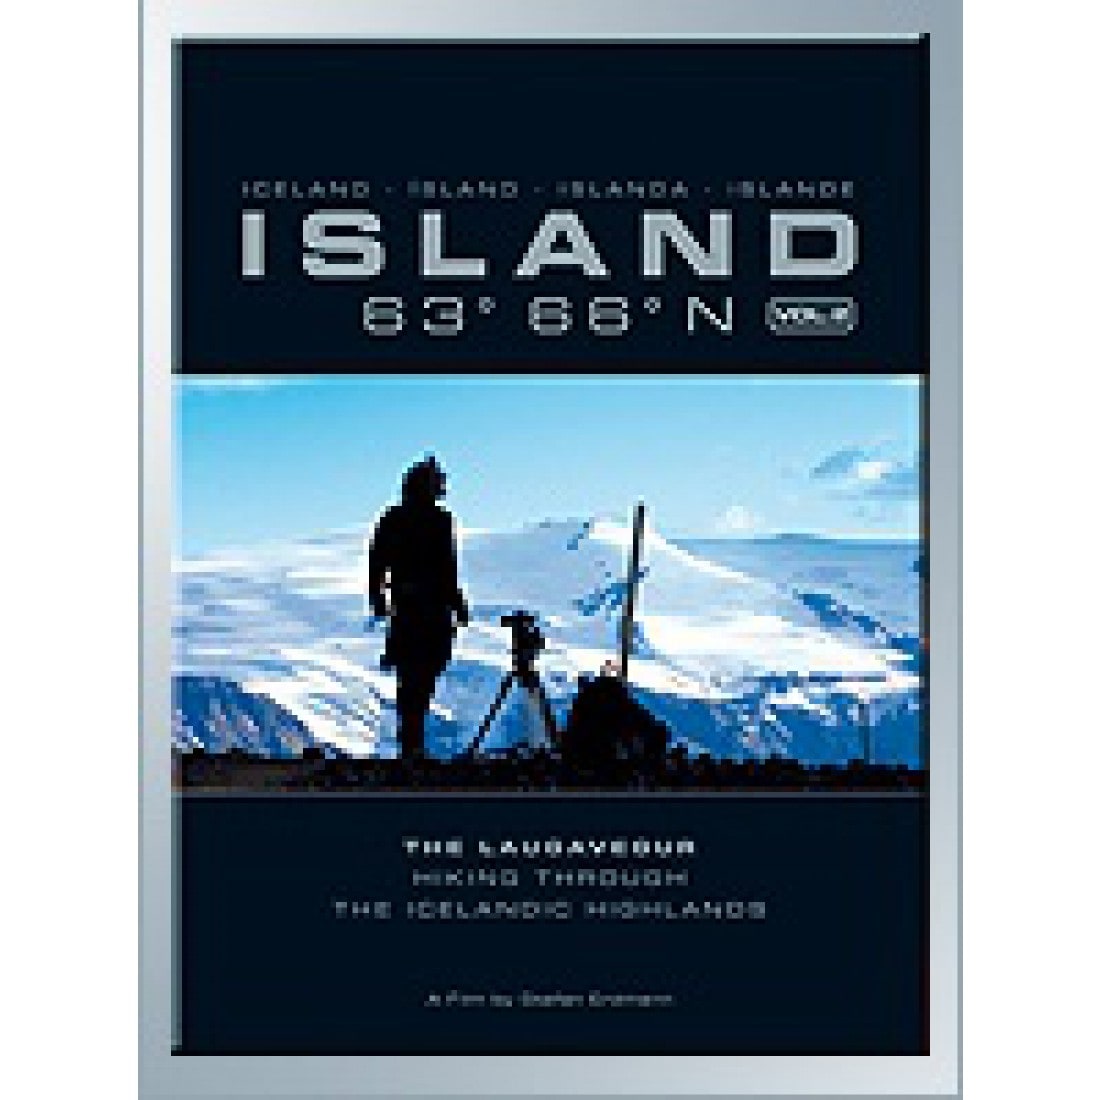 Island 63° 66° N Laugarvegur vol. 2 / DVD - nammi.is